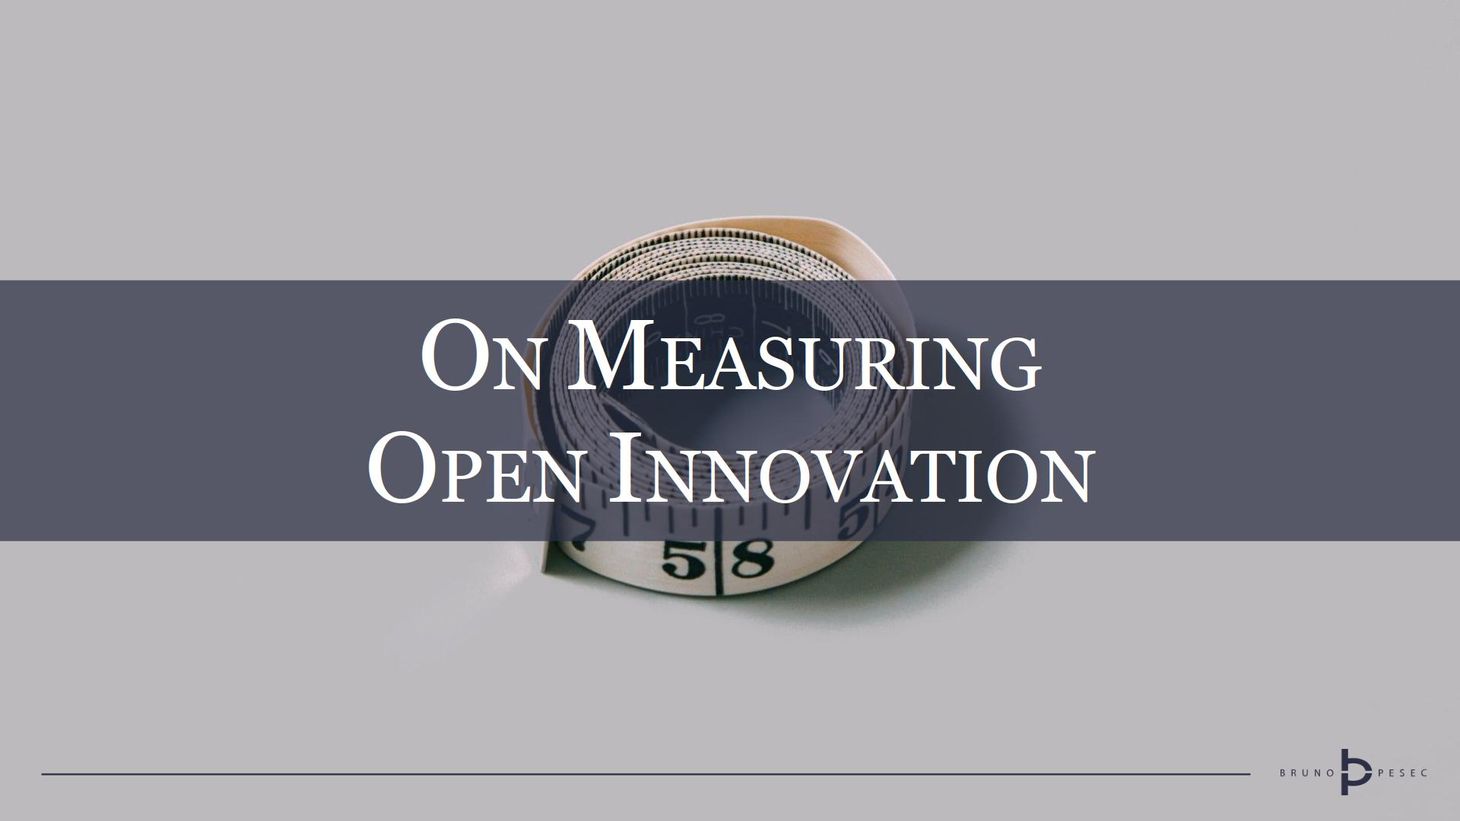 On measuring open innovation